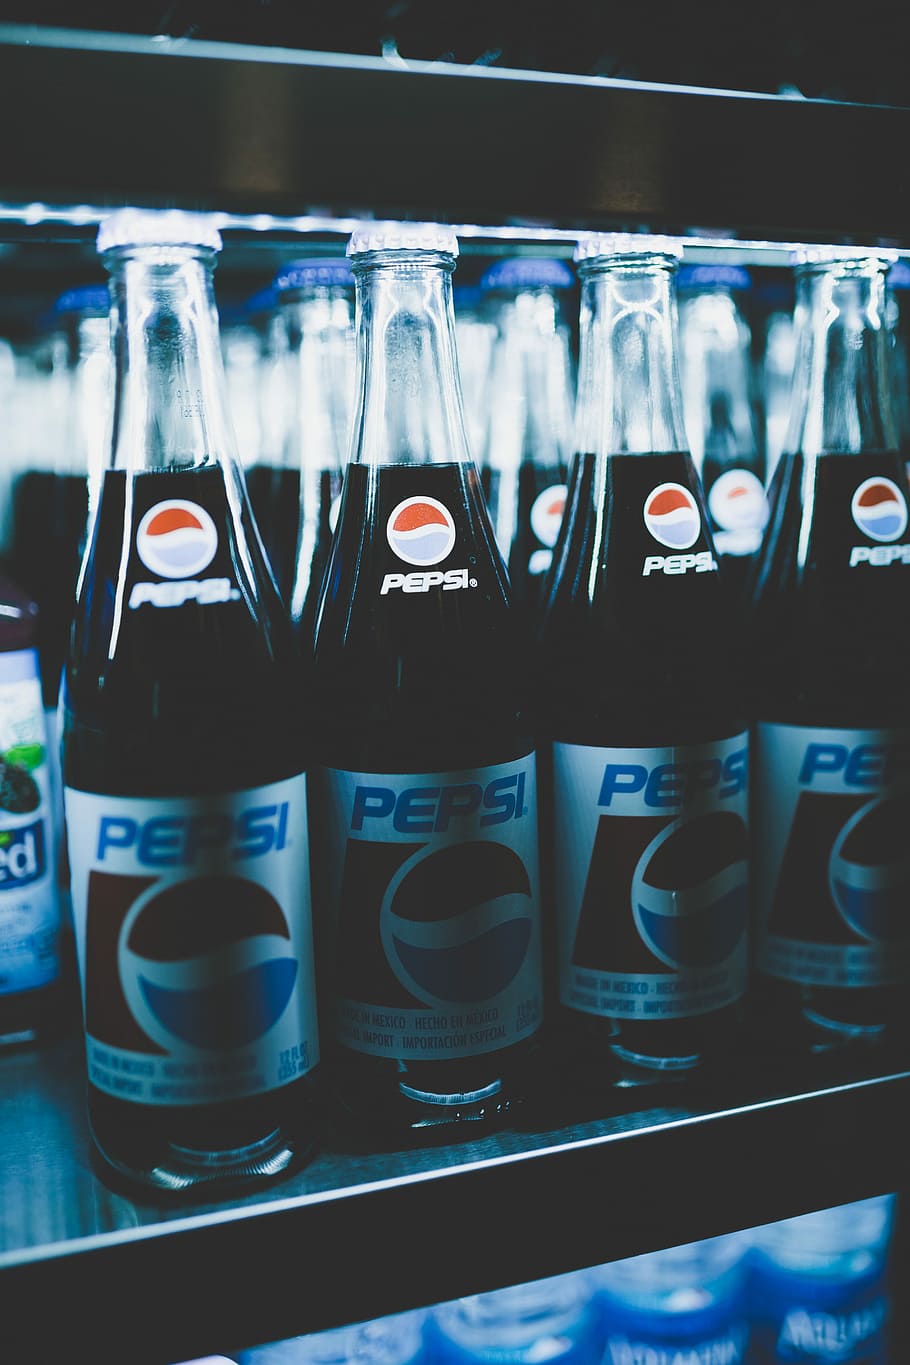 Pepsi bottles on cooler, close-up photo of Pepsi glass bottles